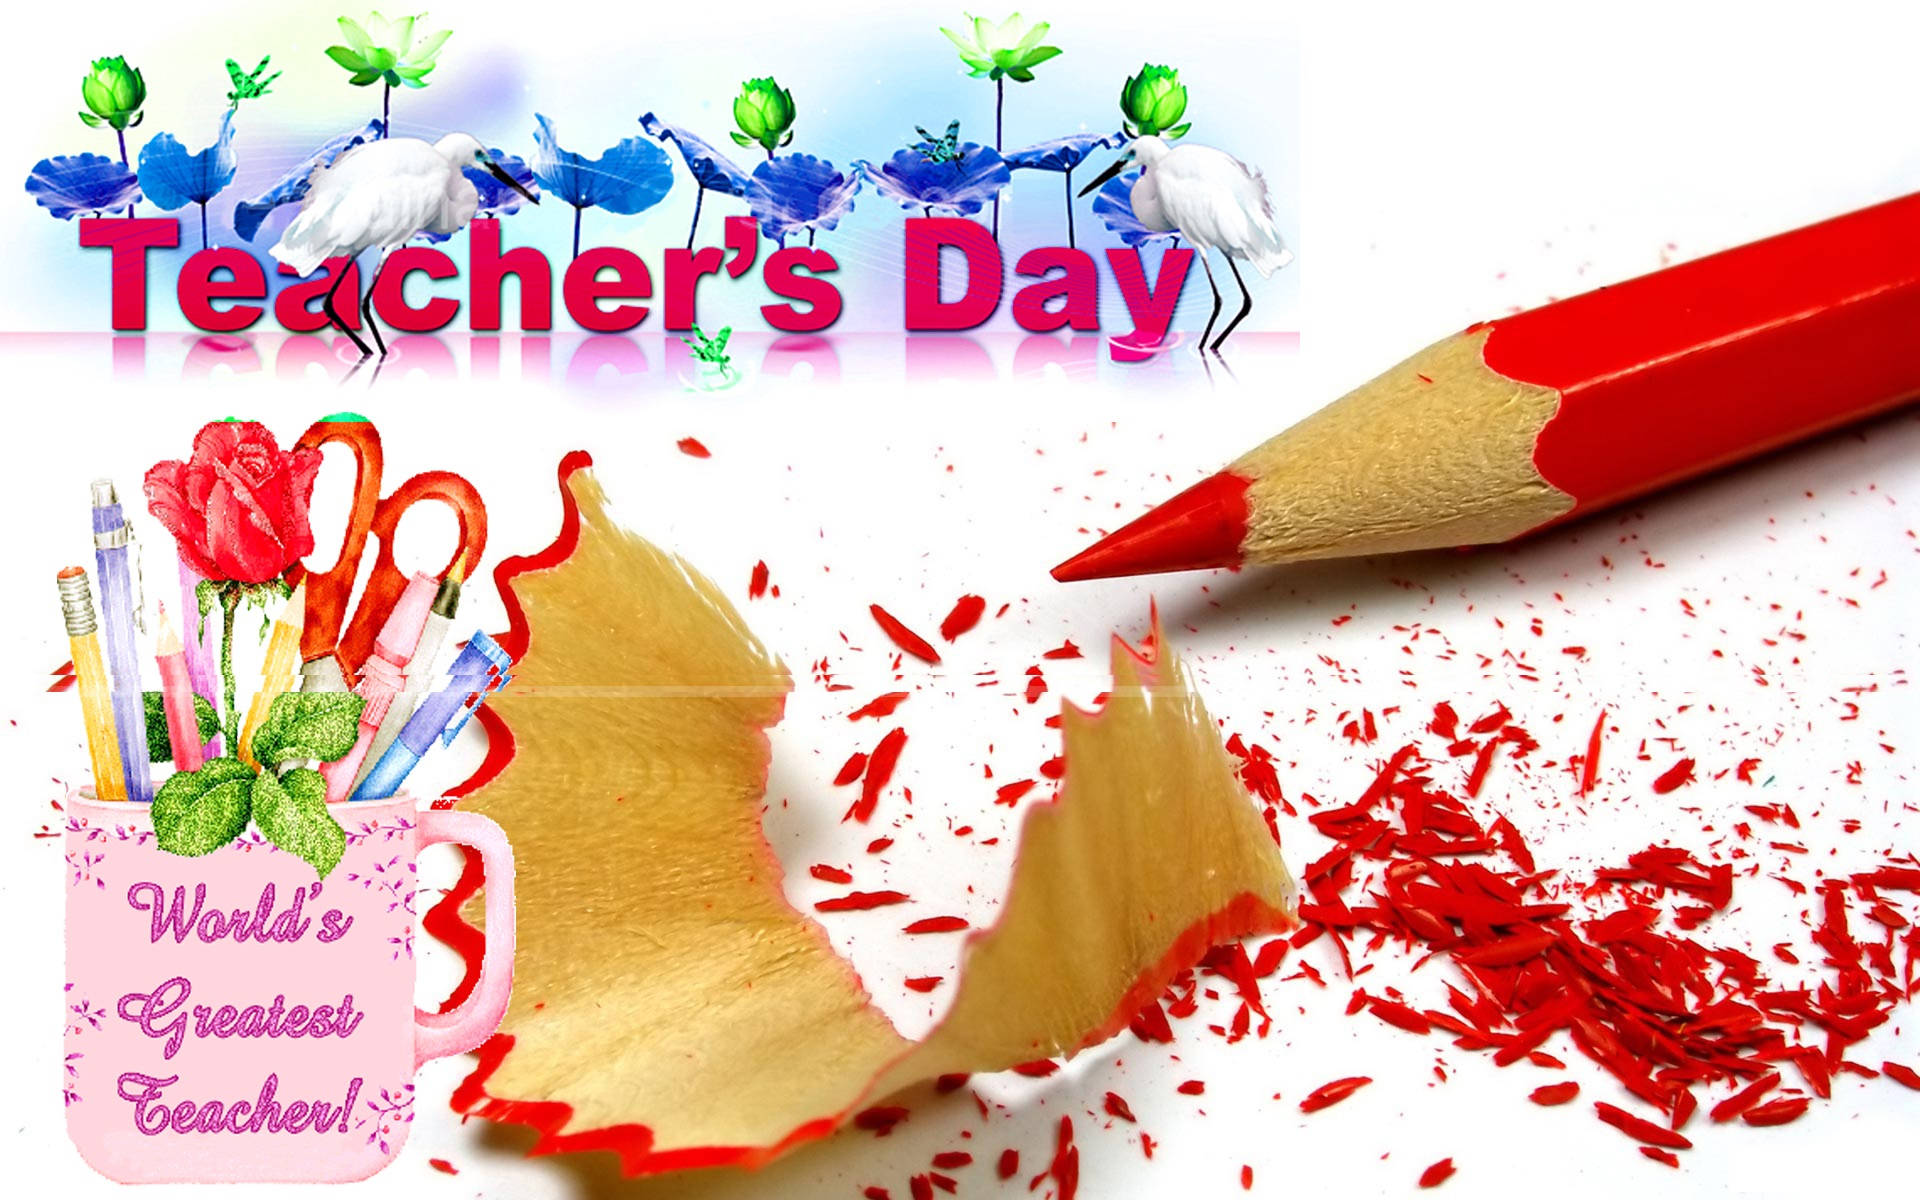 Happy Teachers' Day World's Greatest